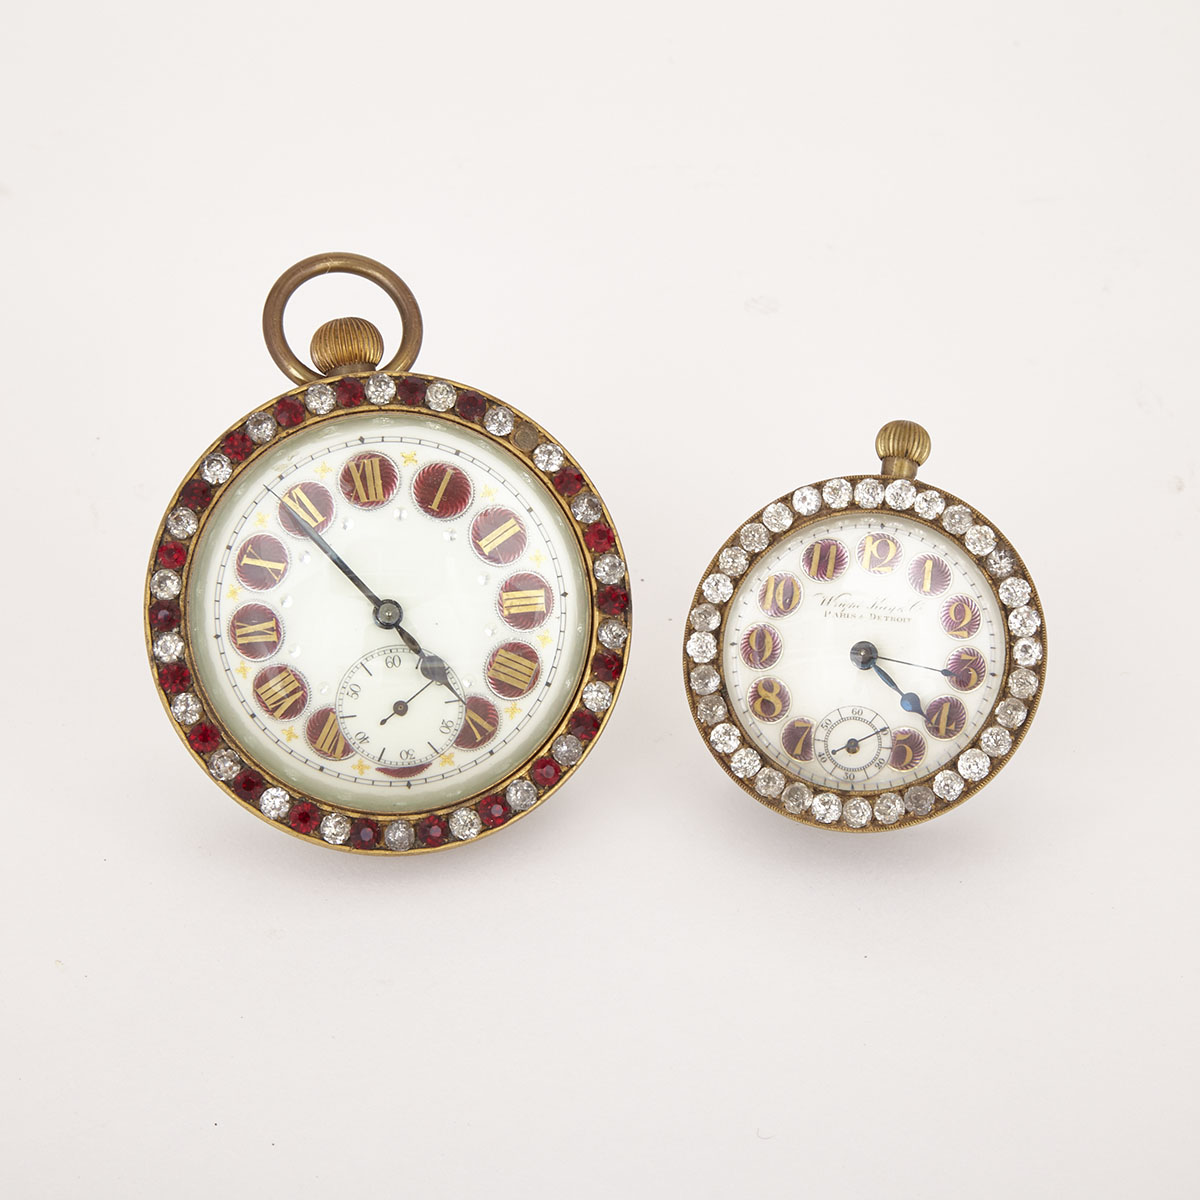 Two French Ball Clocks, c.1900